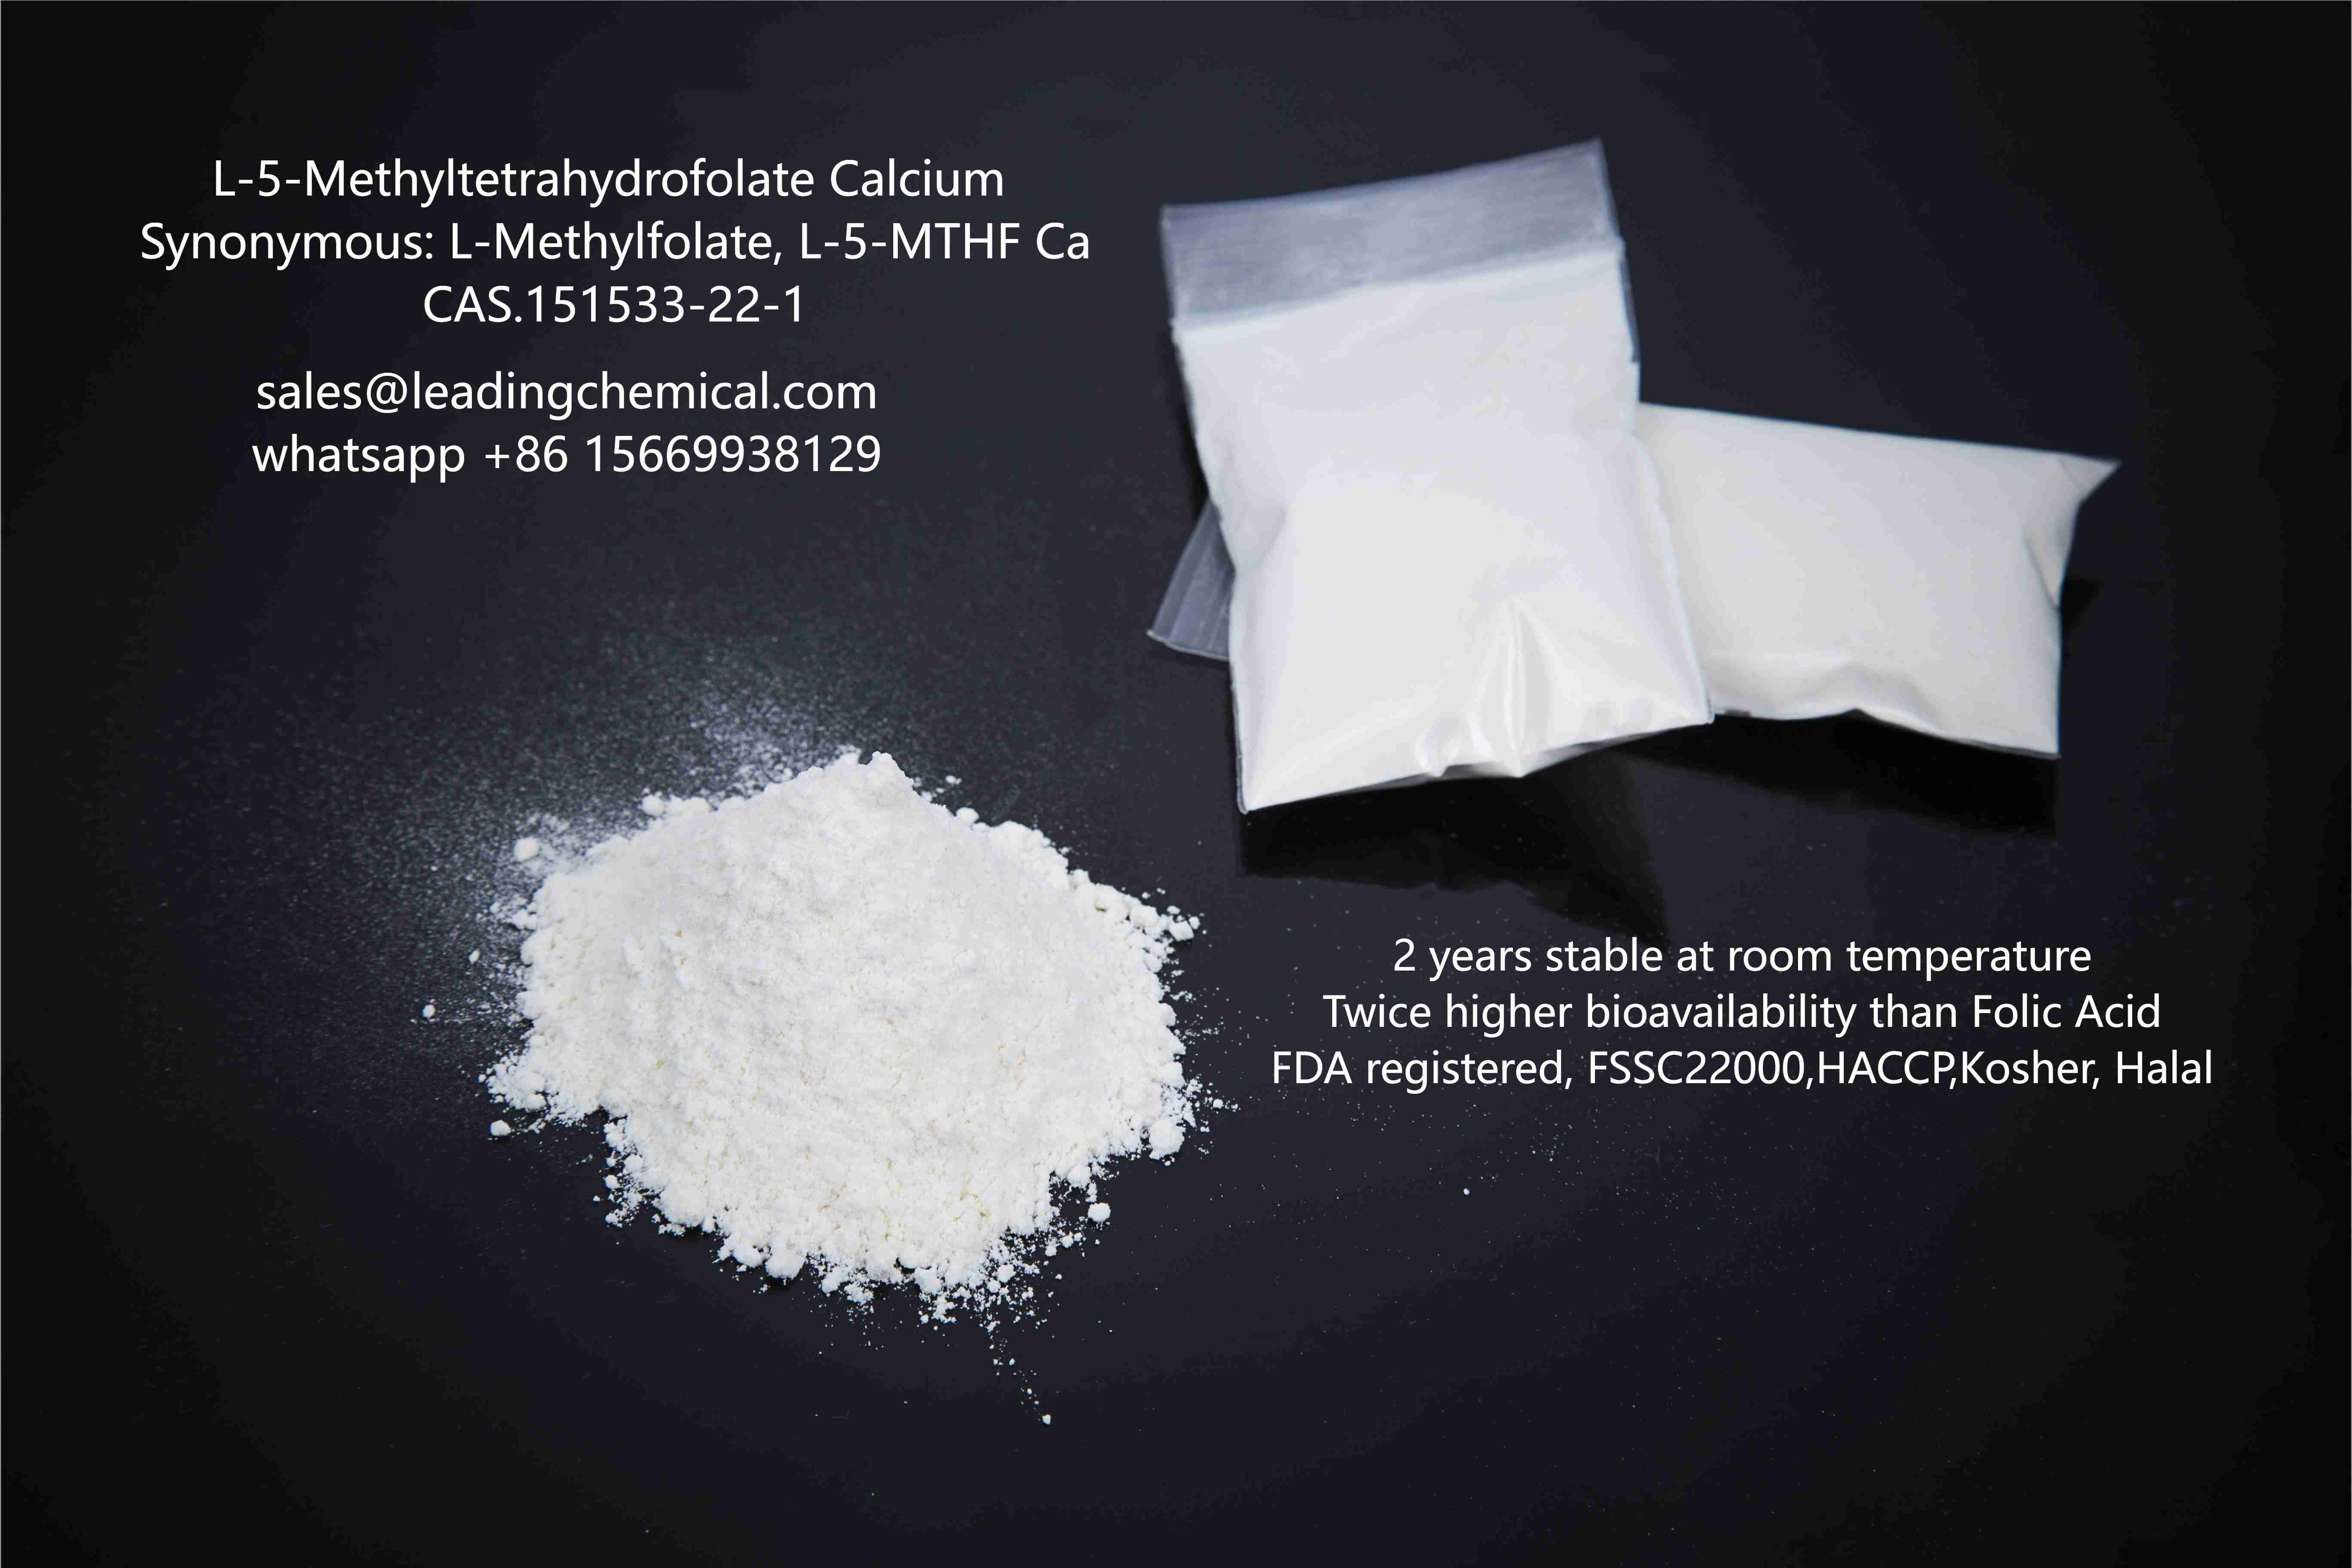 L-5-Methyltetrahydrofolate calcium 